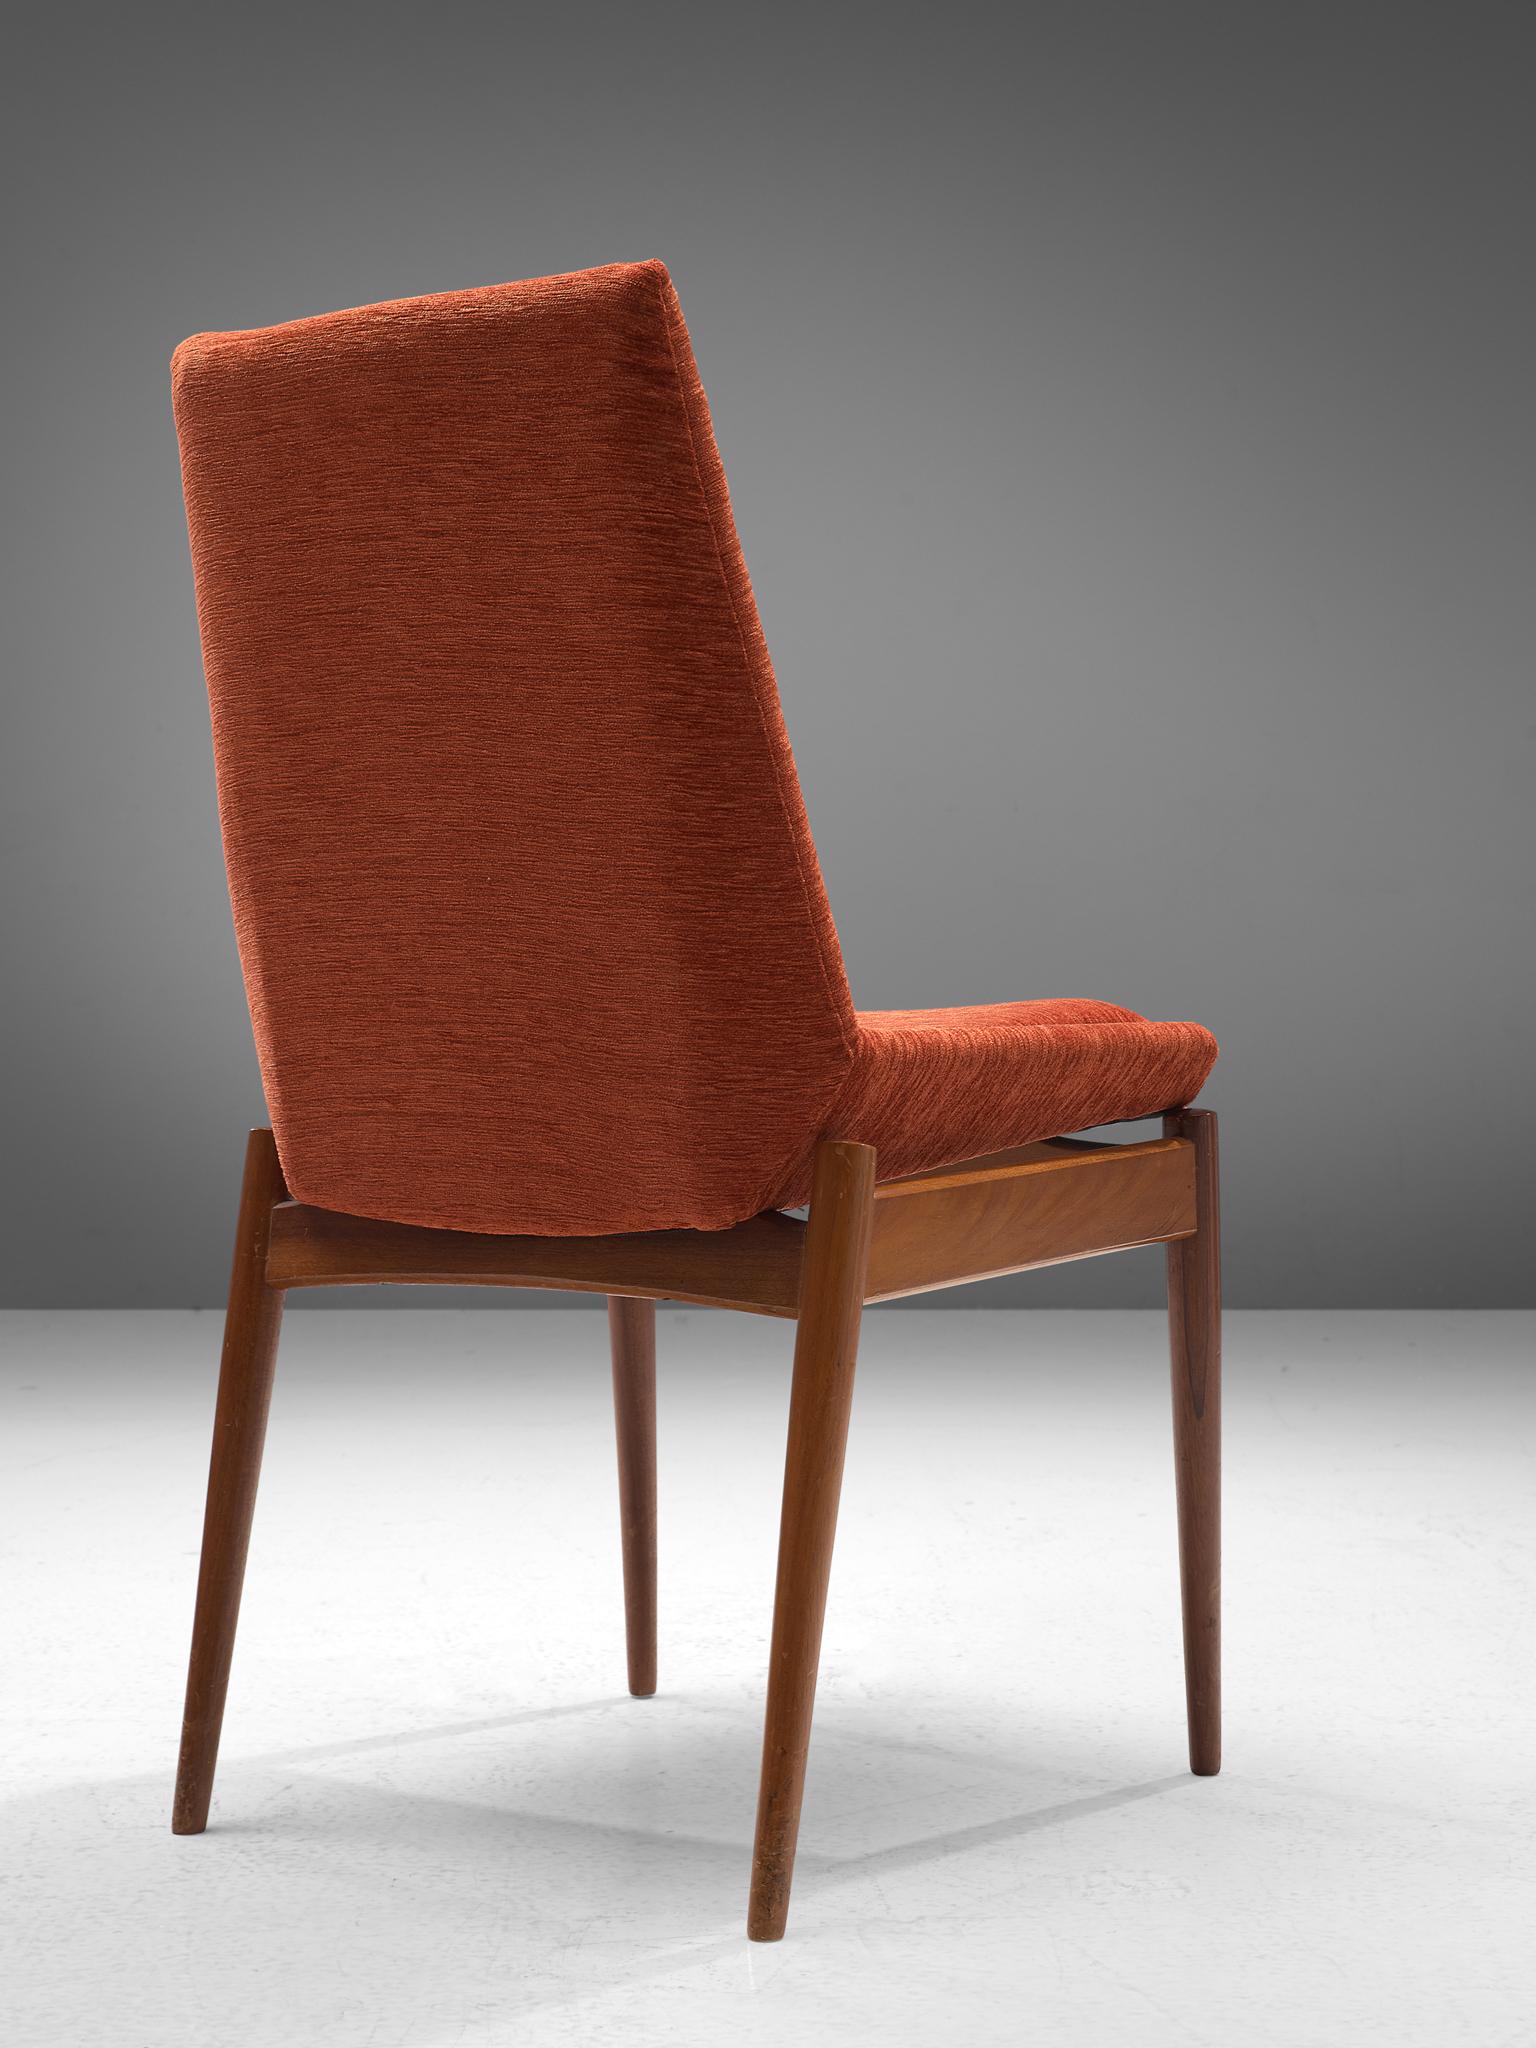 Velvet Scandinavian Chairs in Teak and Terracotta Corduroy